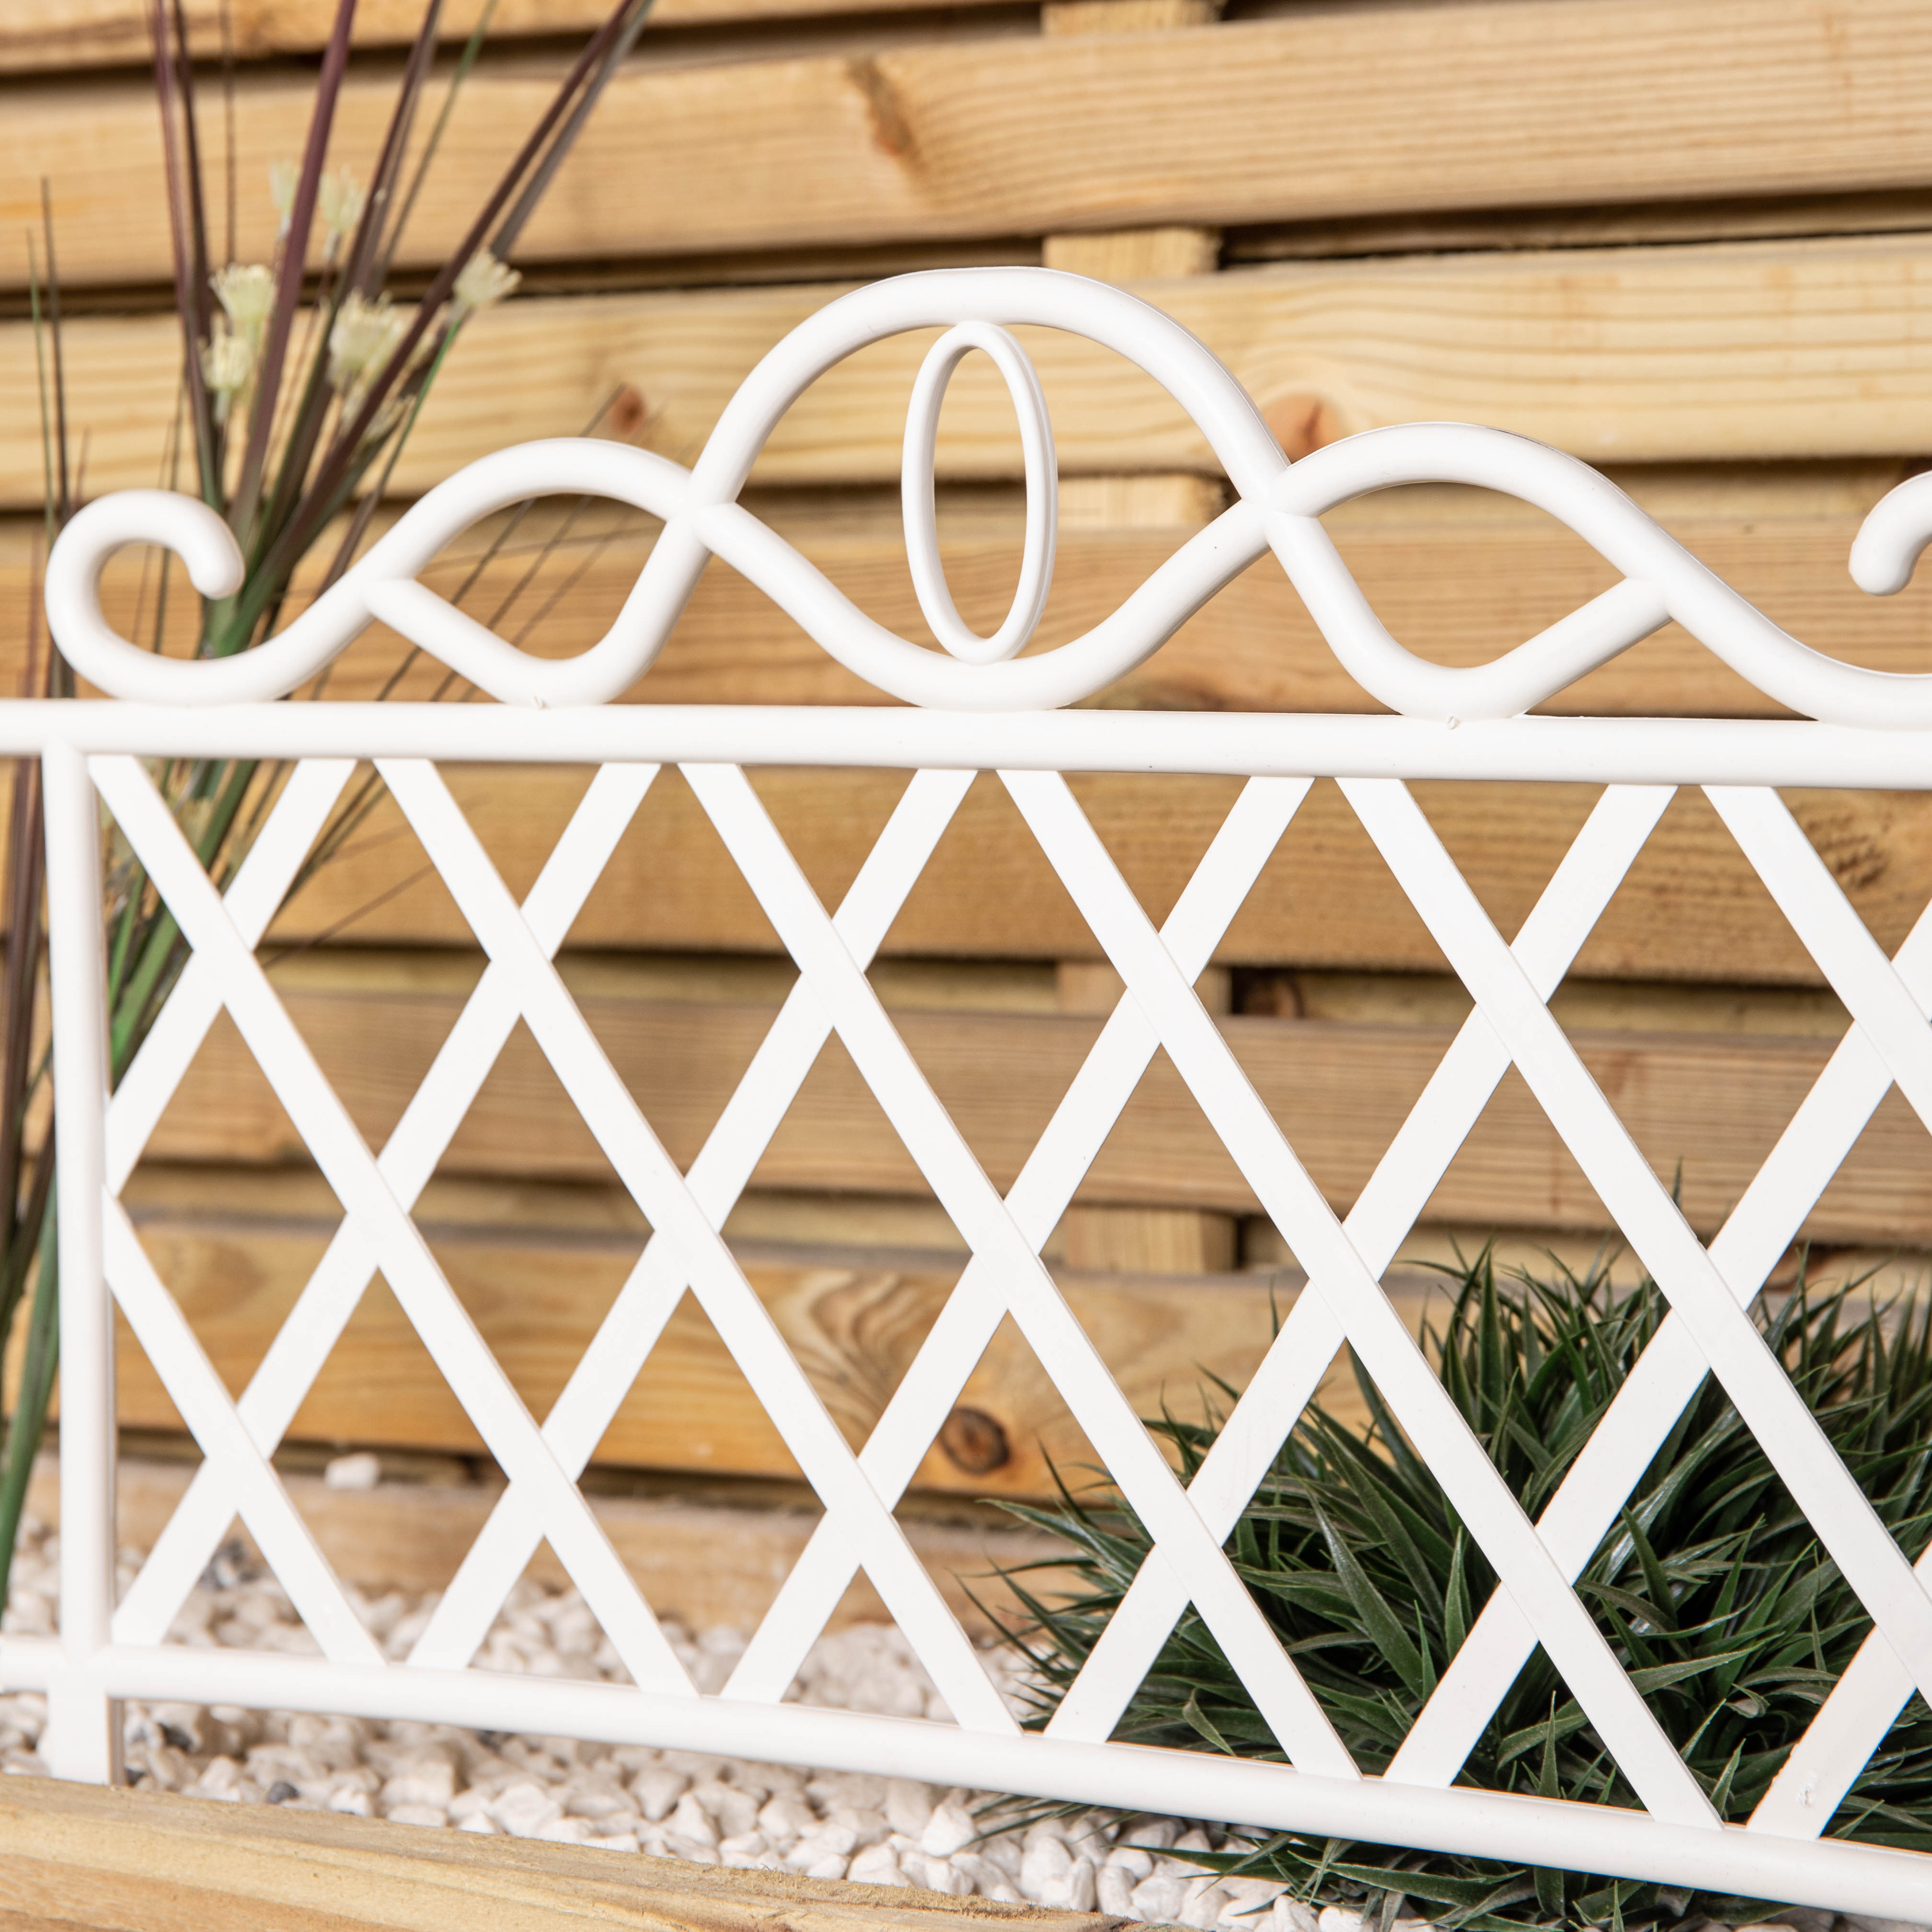 Pack of 3 27cm White Plastic Garden Patio Lawn Border Fence Edging